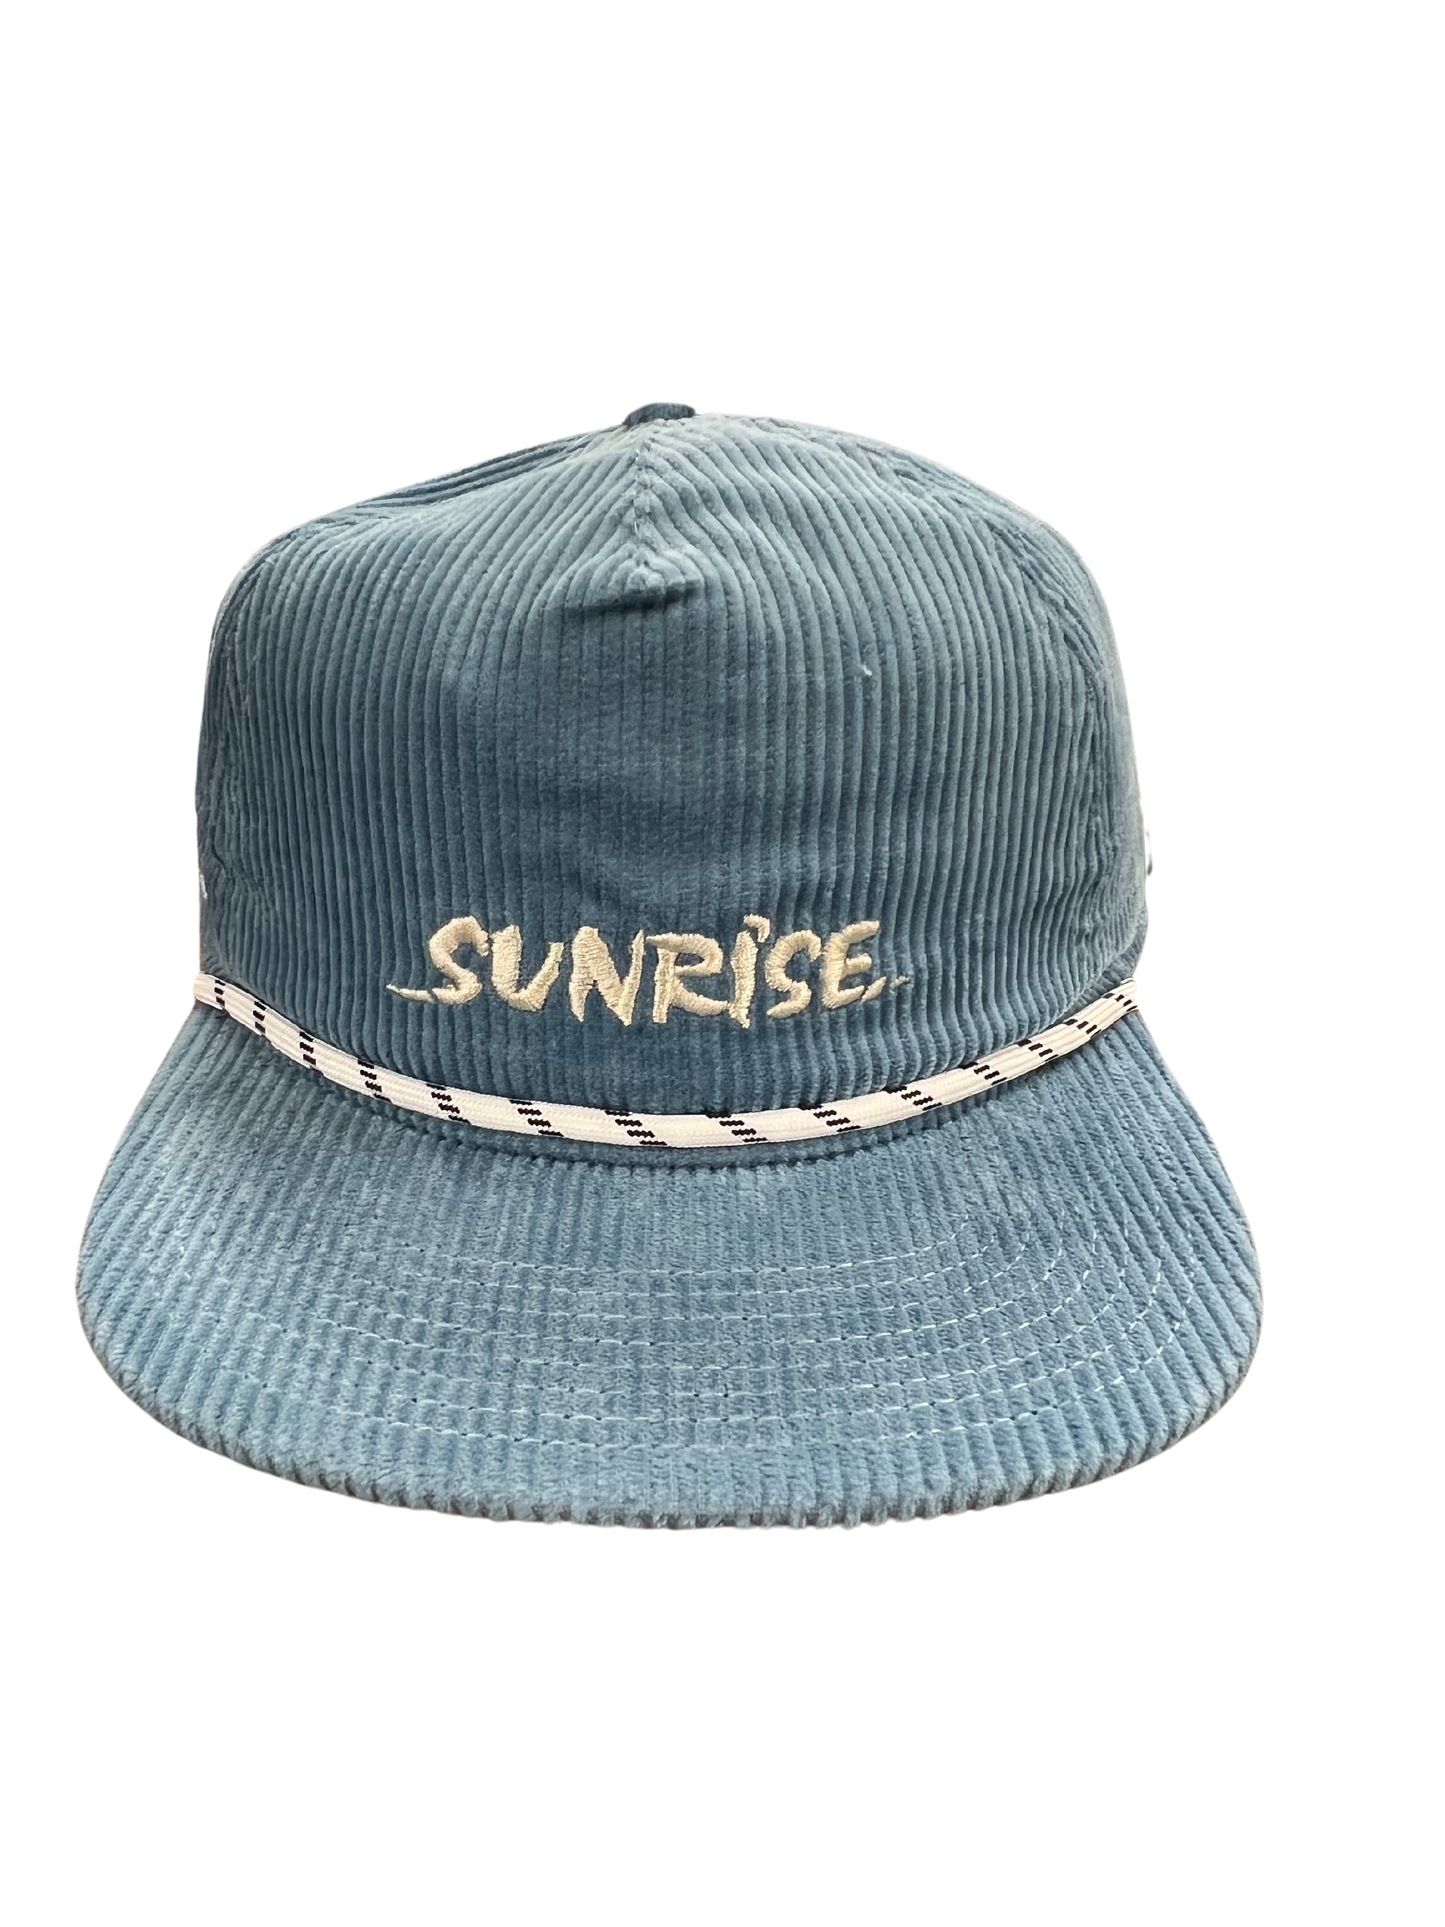 Sunrise Surf Shop Rope Original Logo Hat